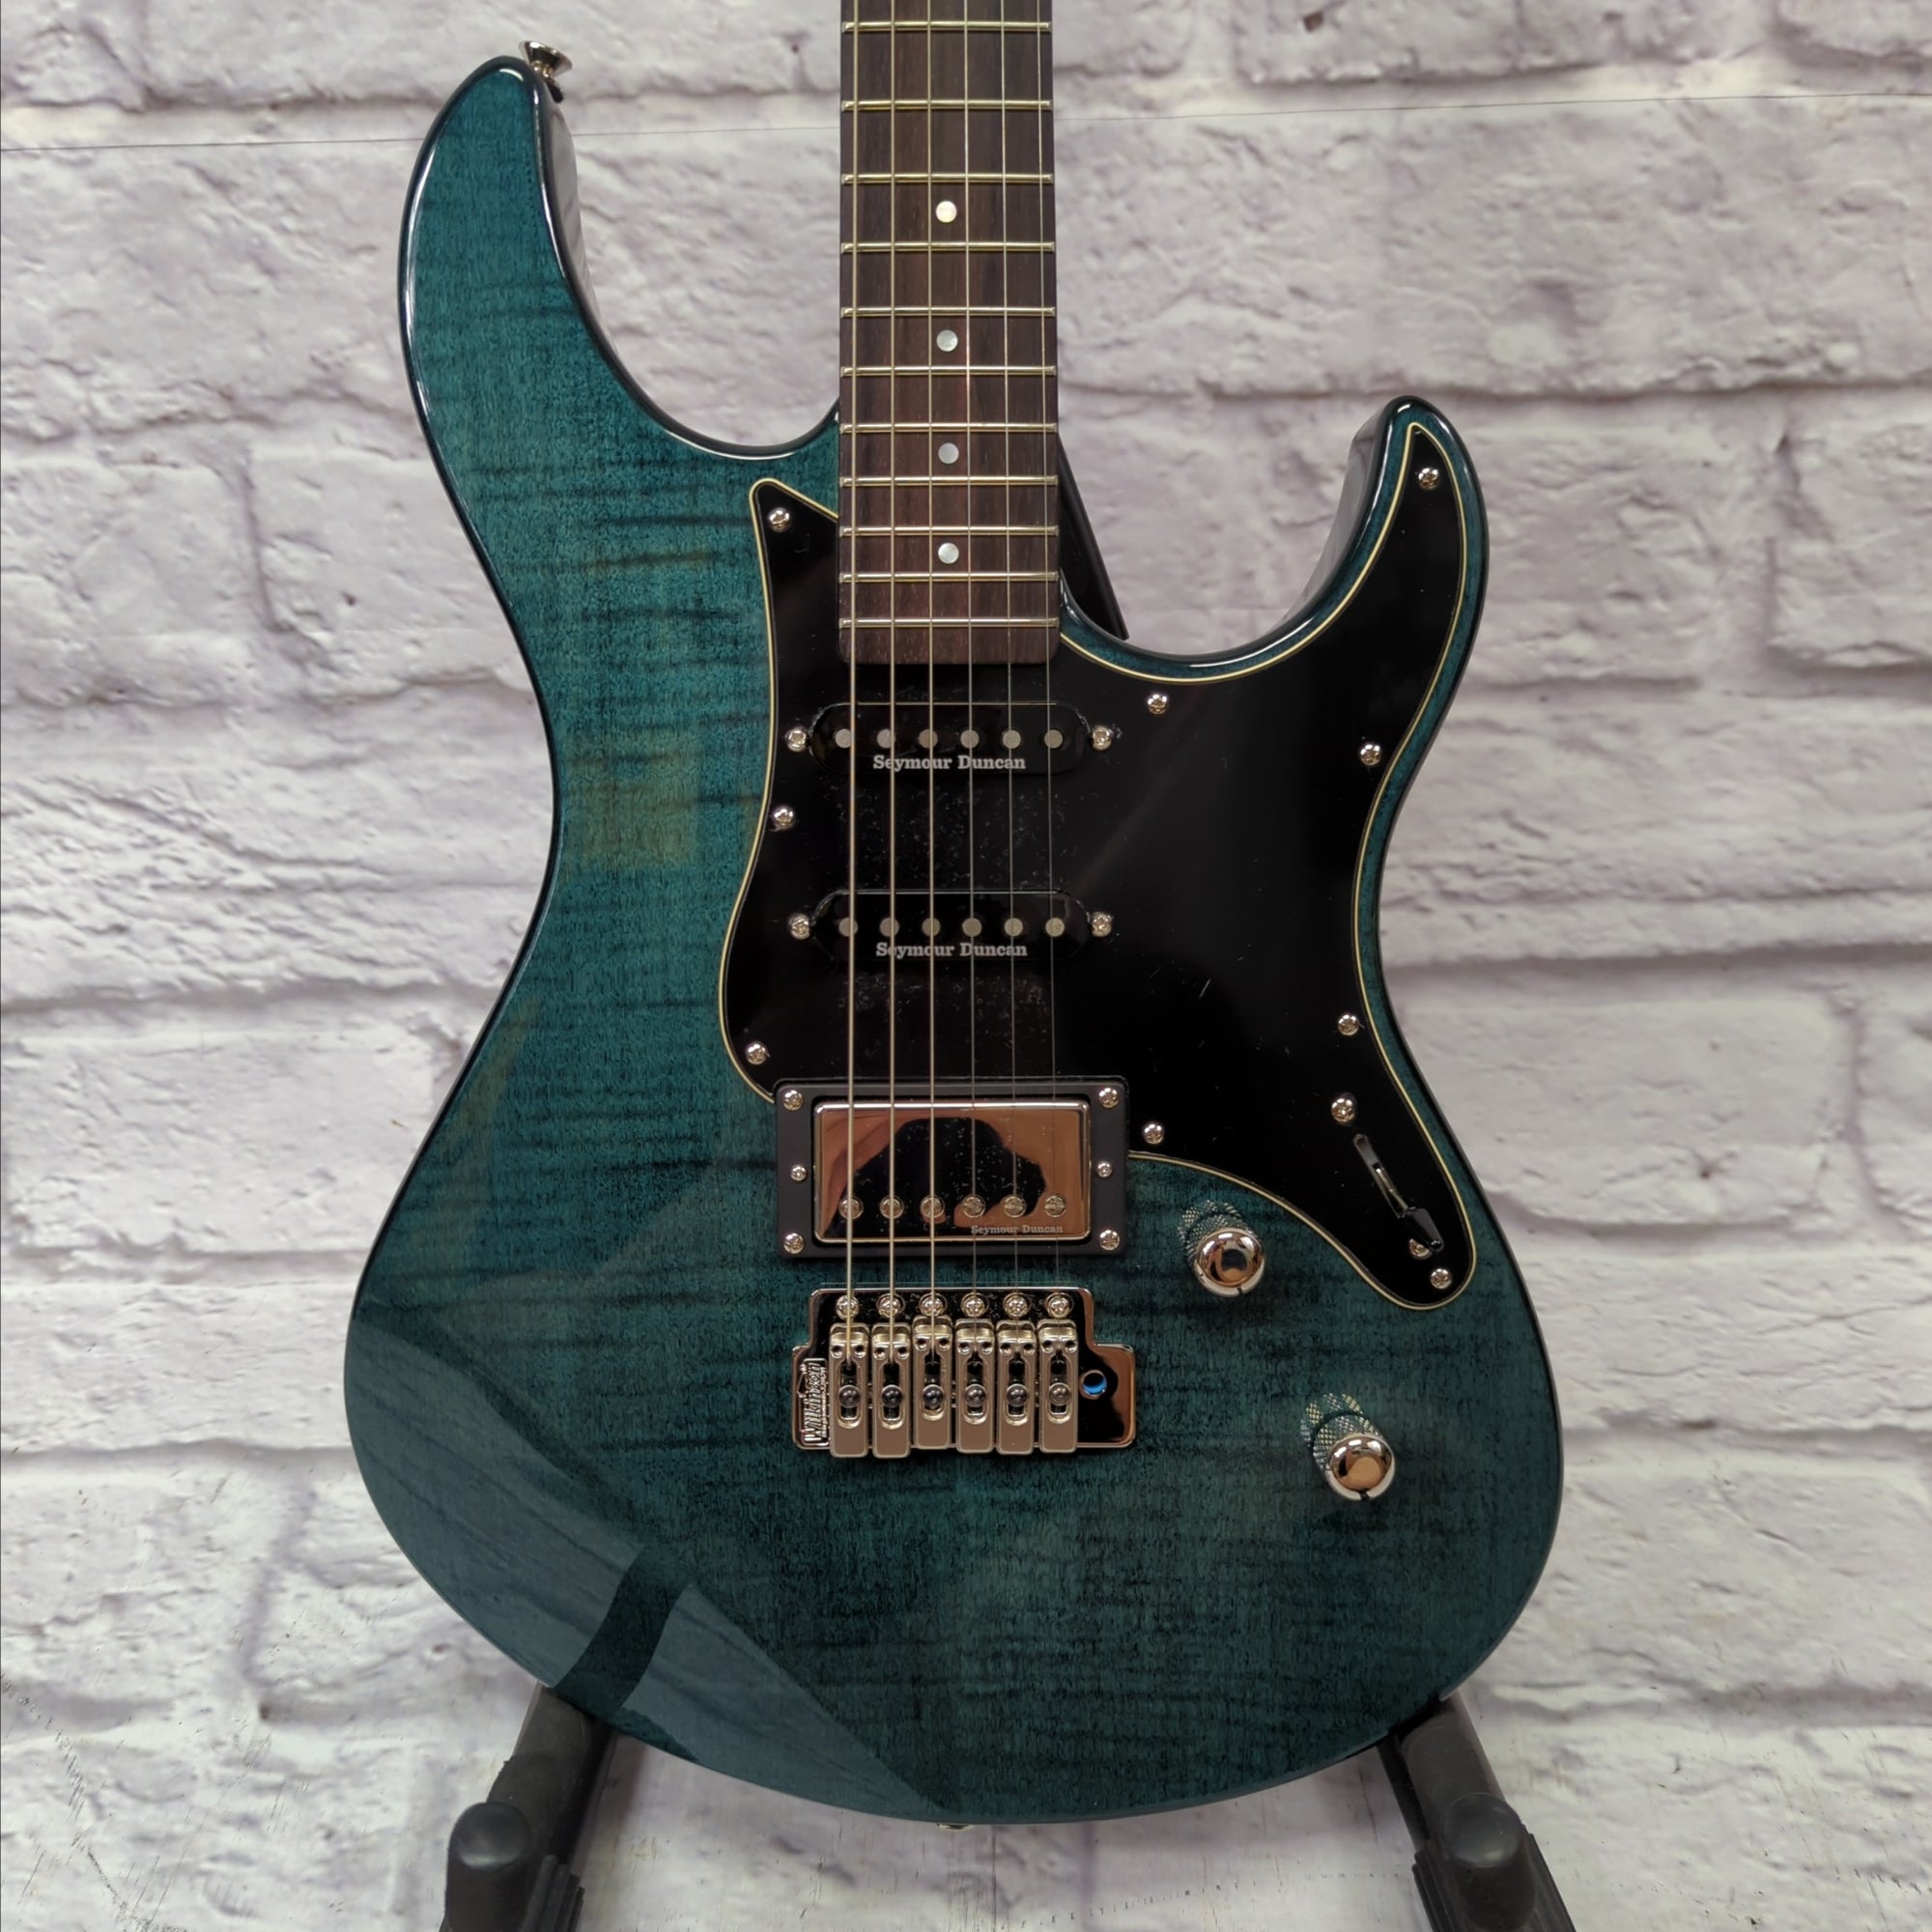 Yamaha Pacifica PAC612VIIFM Indigo Blue Electric Guitar